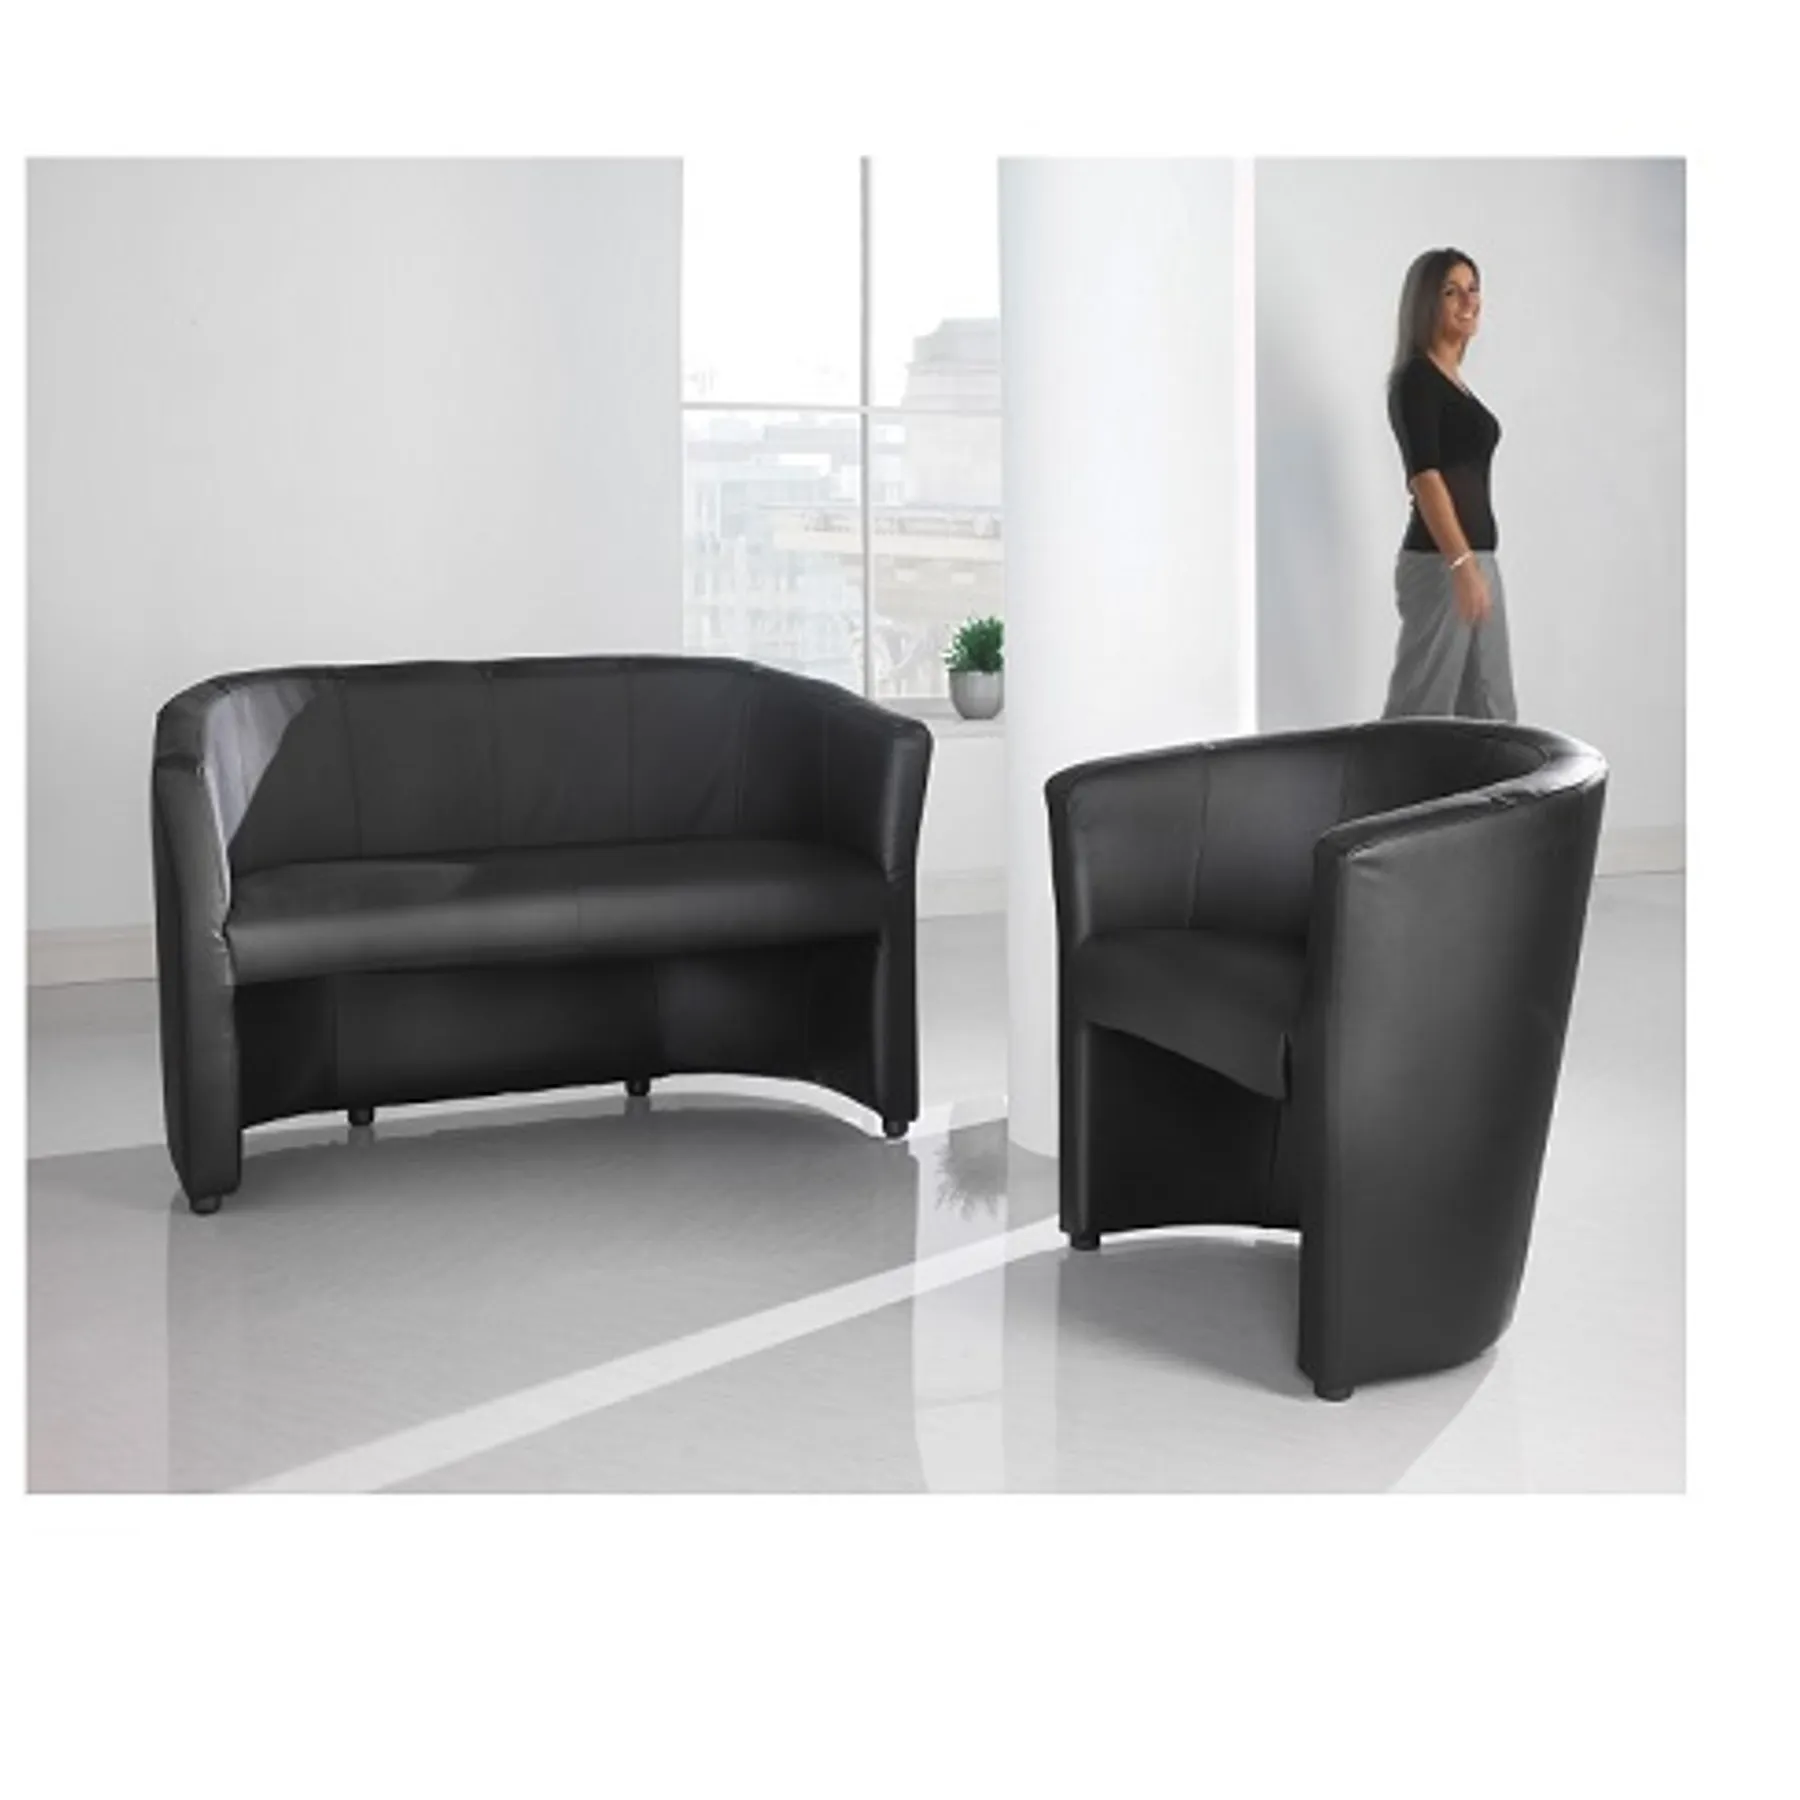 LOF Direct Dams London Leather tub chair LON50001 Single Chair Roomset 2